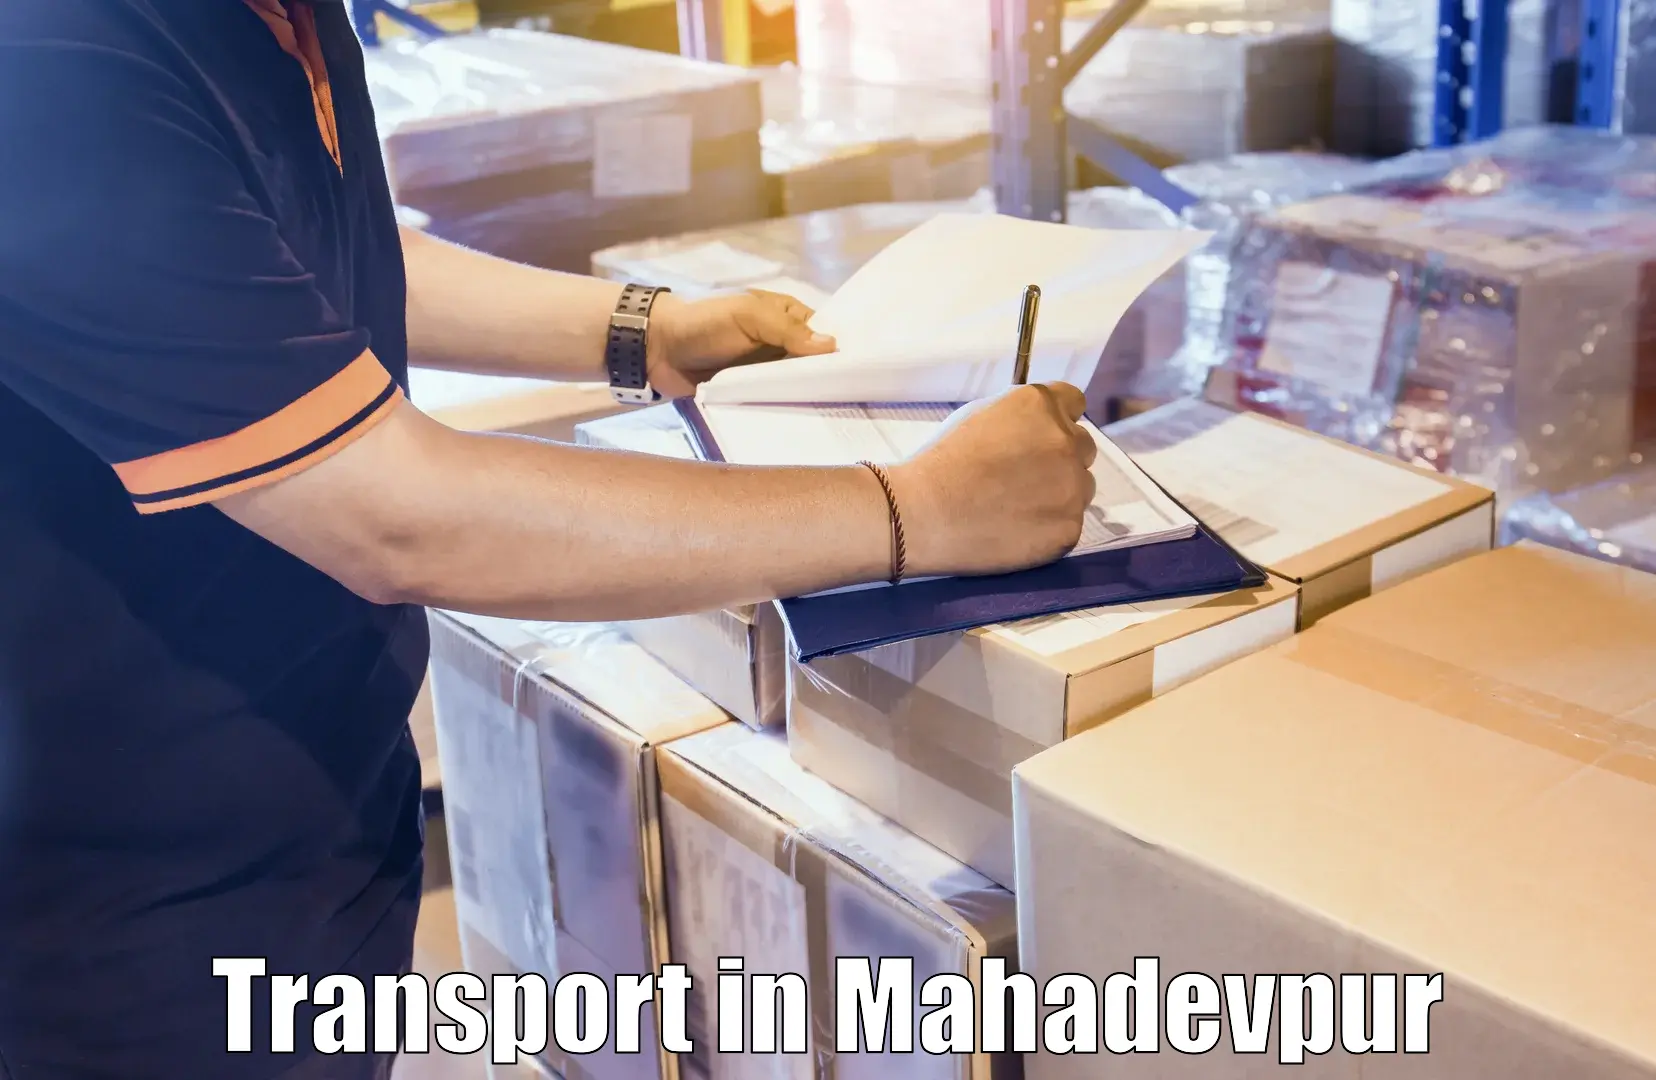 Online transport in Mahadevpur